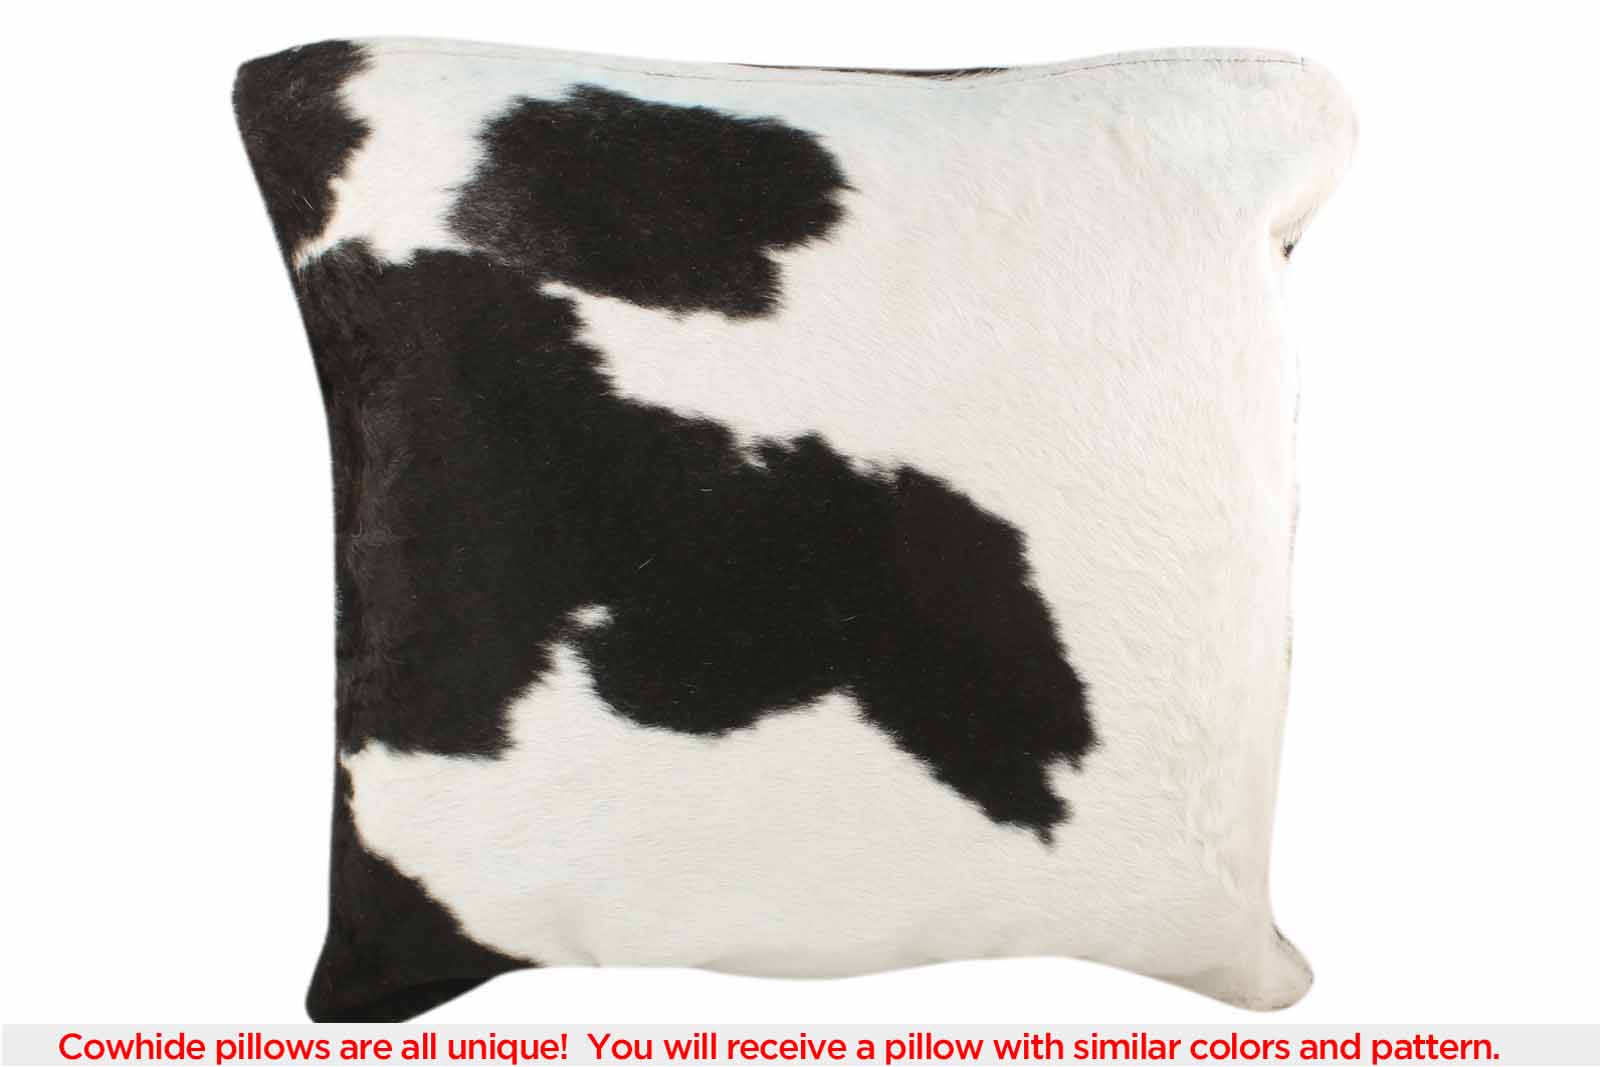 001HUDSN - Brazilian Cowhide Pillow